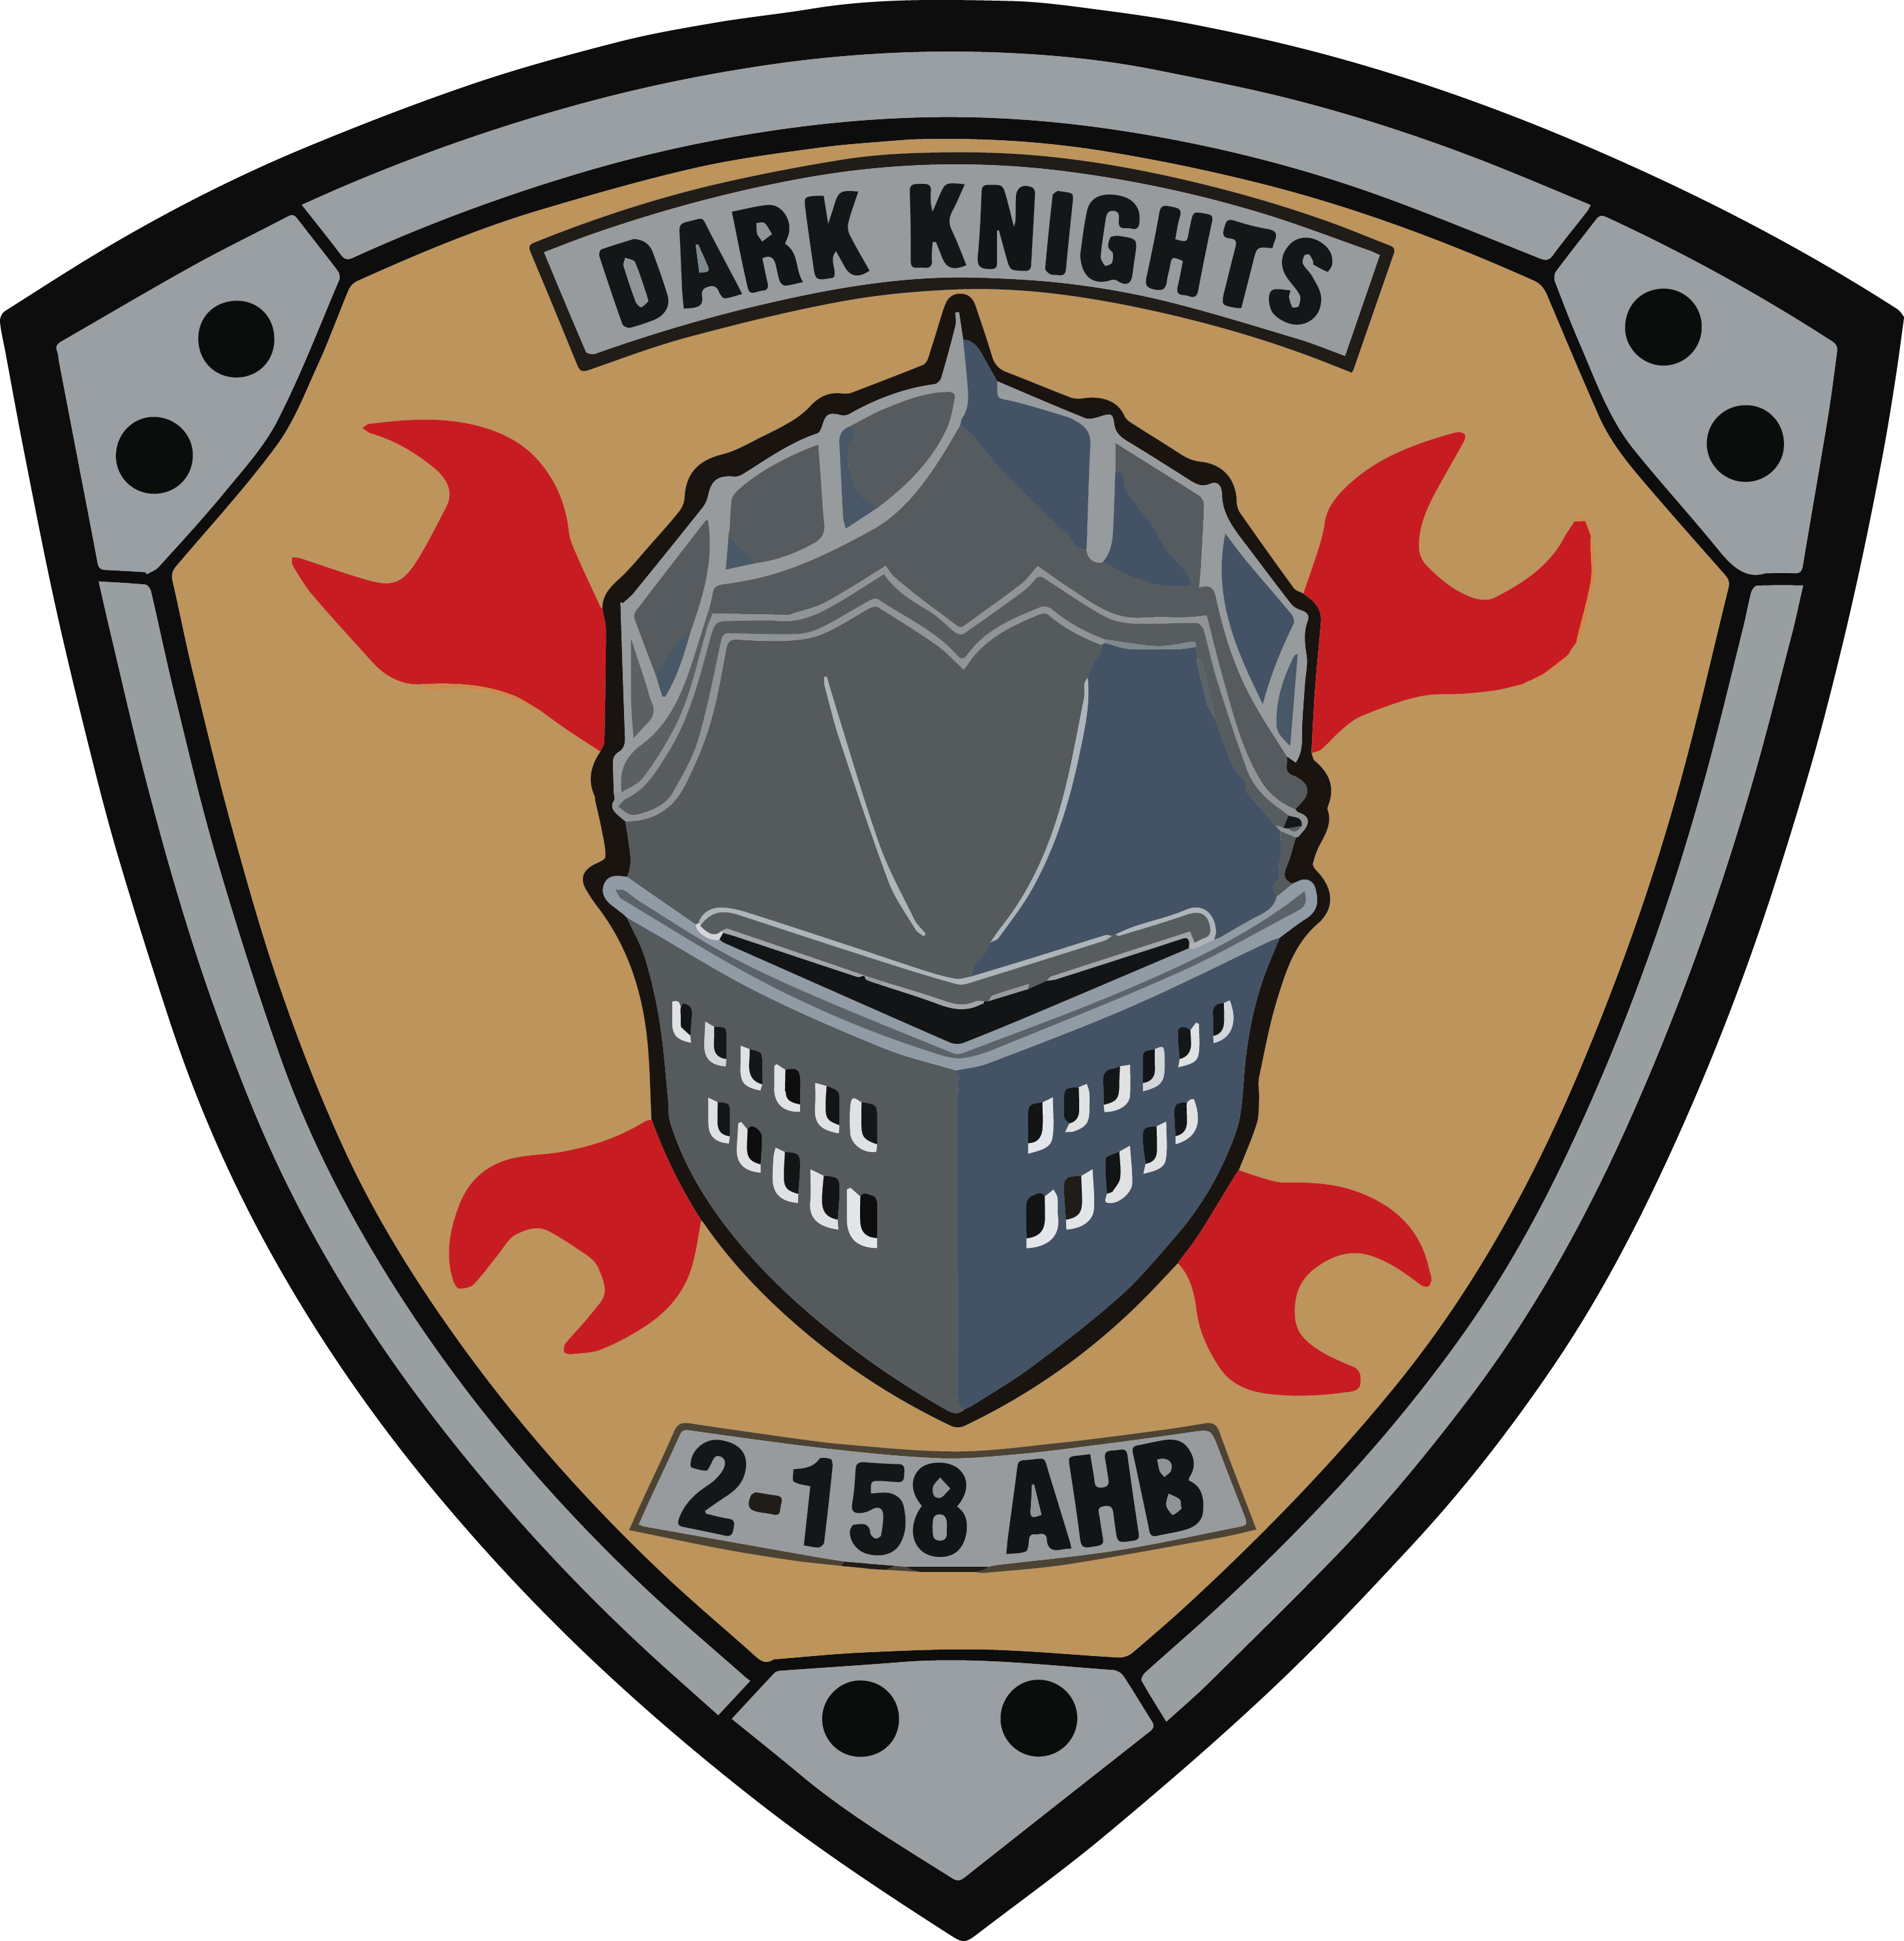 D Co, 2-158 AHB "Dark Knights"